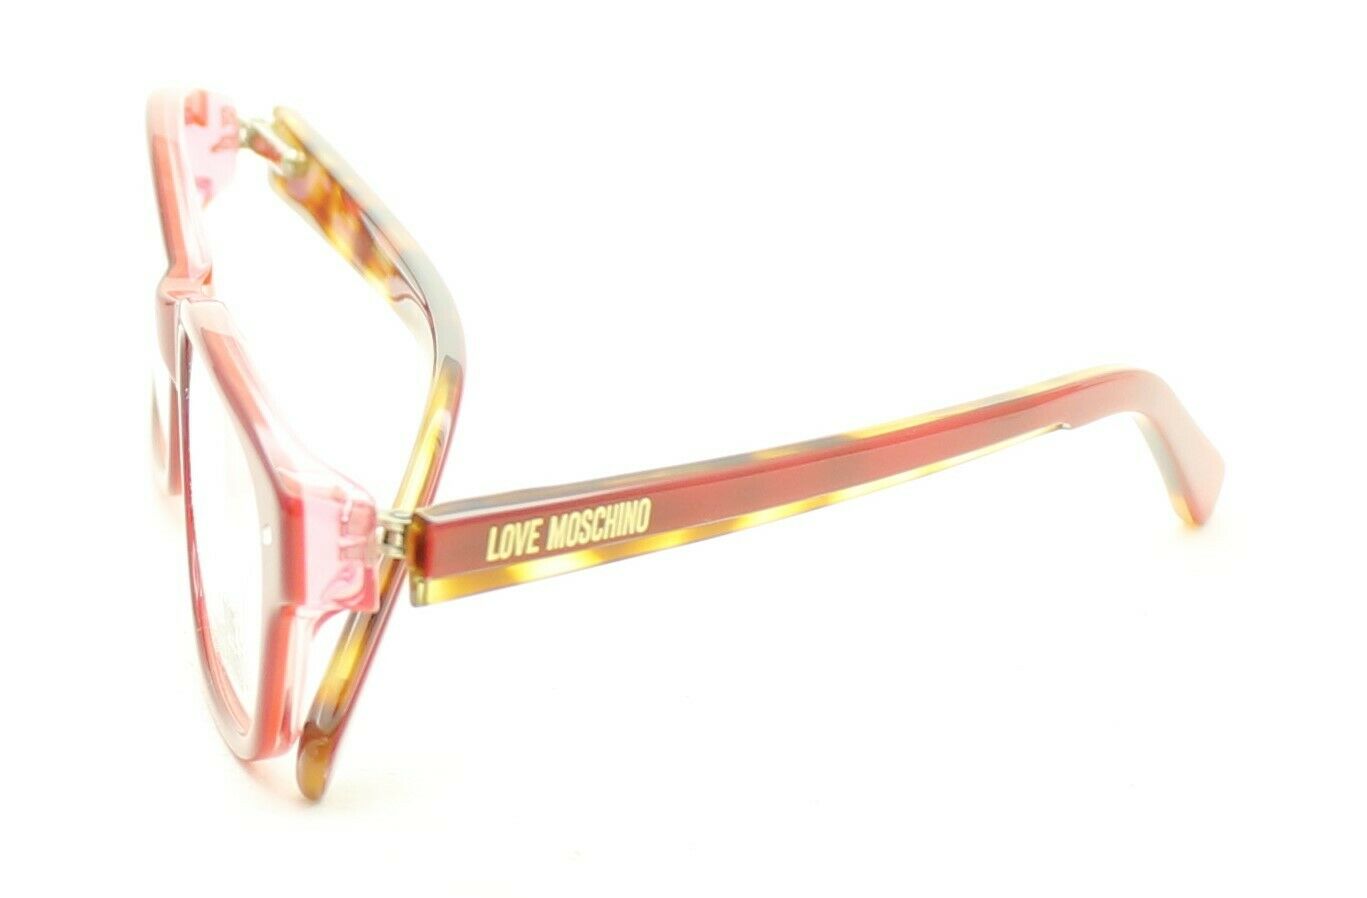 MOSCHINO LM 05 30400184 53mm Eyewear FRAMES RX Optical Glasses Eyeglasses - New